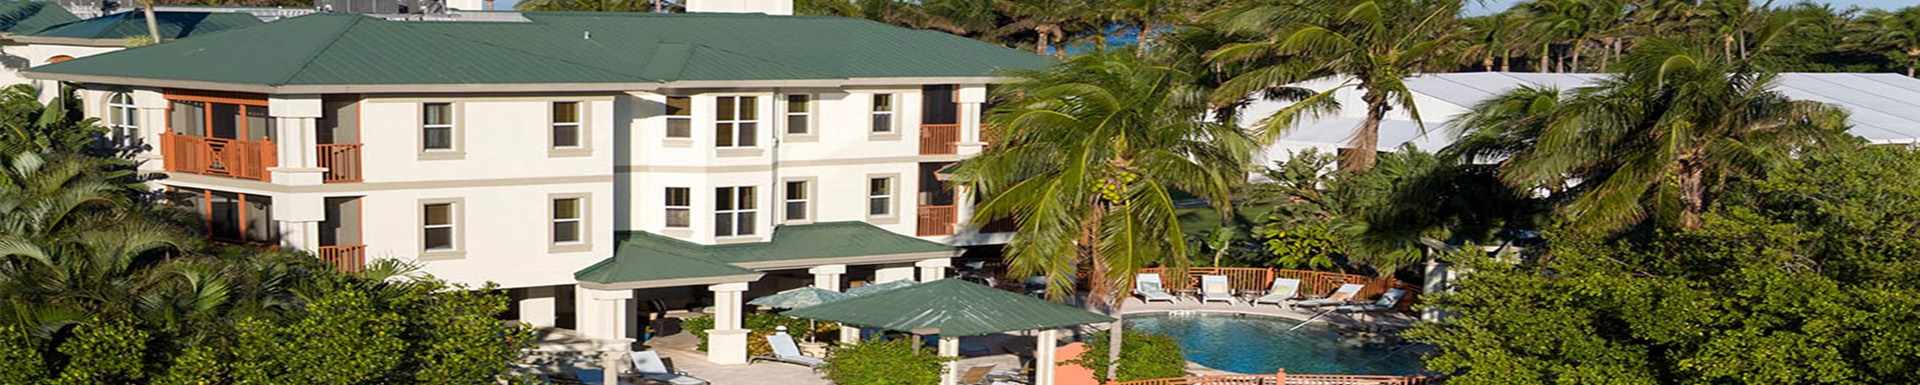 Harbourview Villas at South Seas Resort